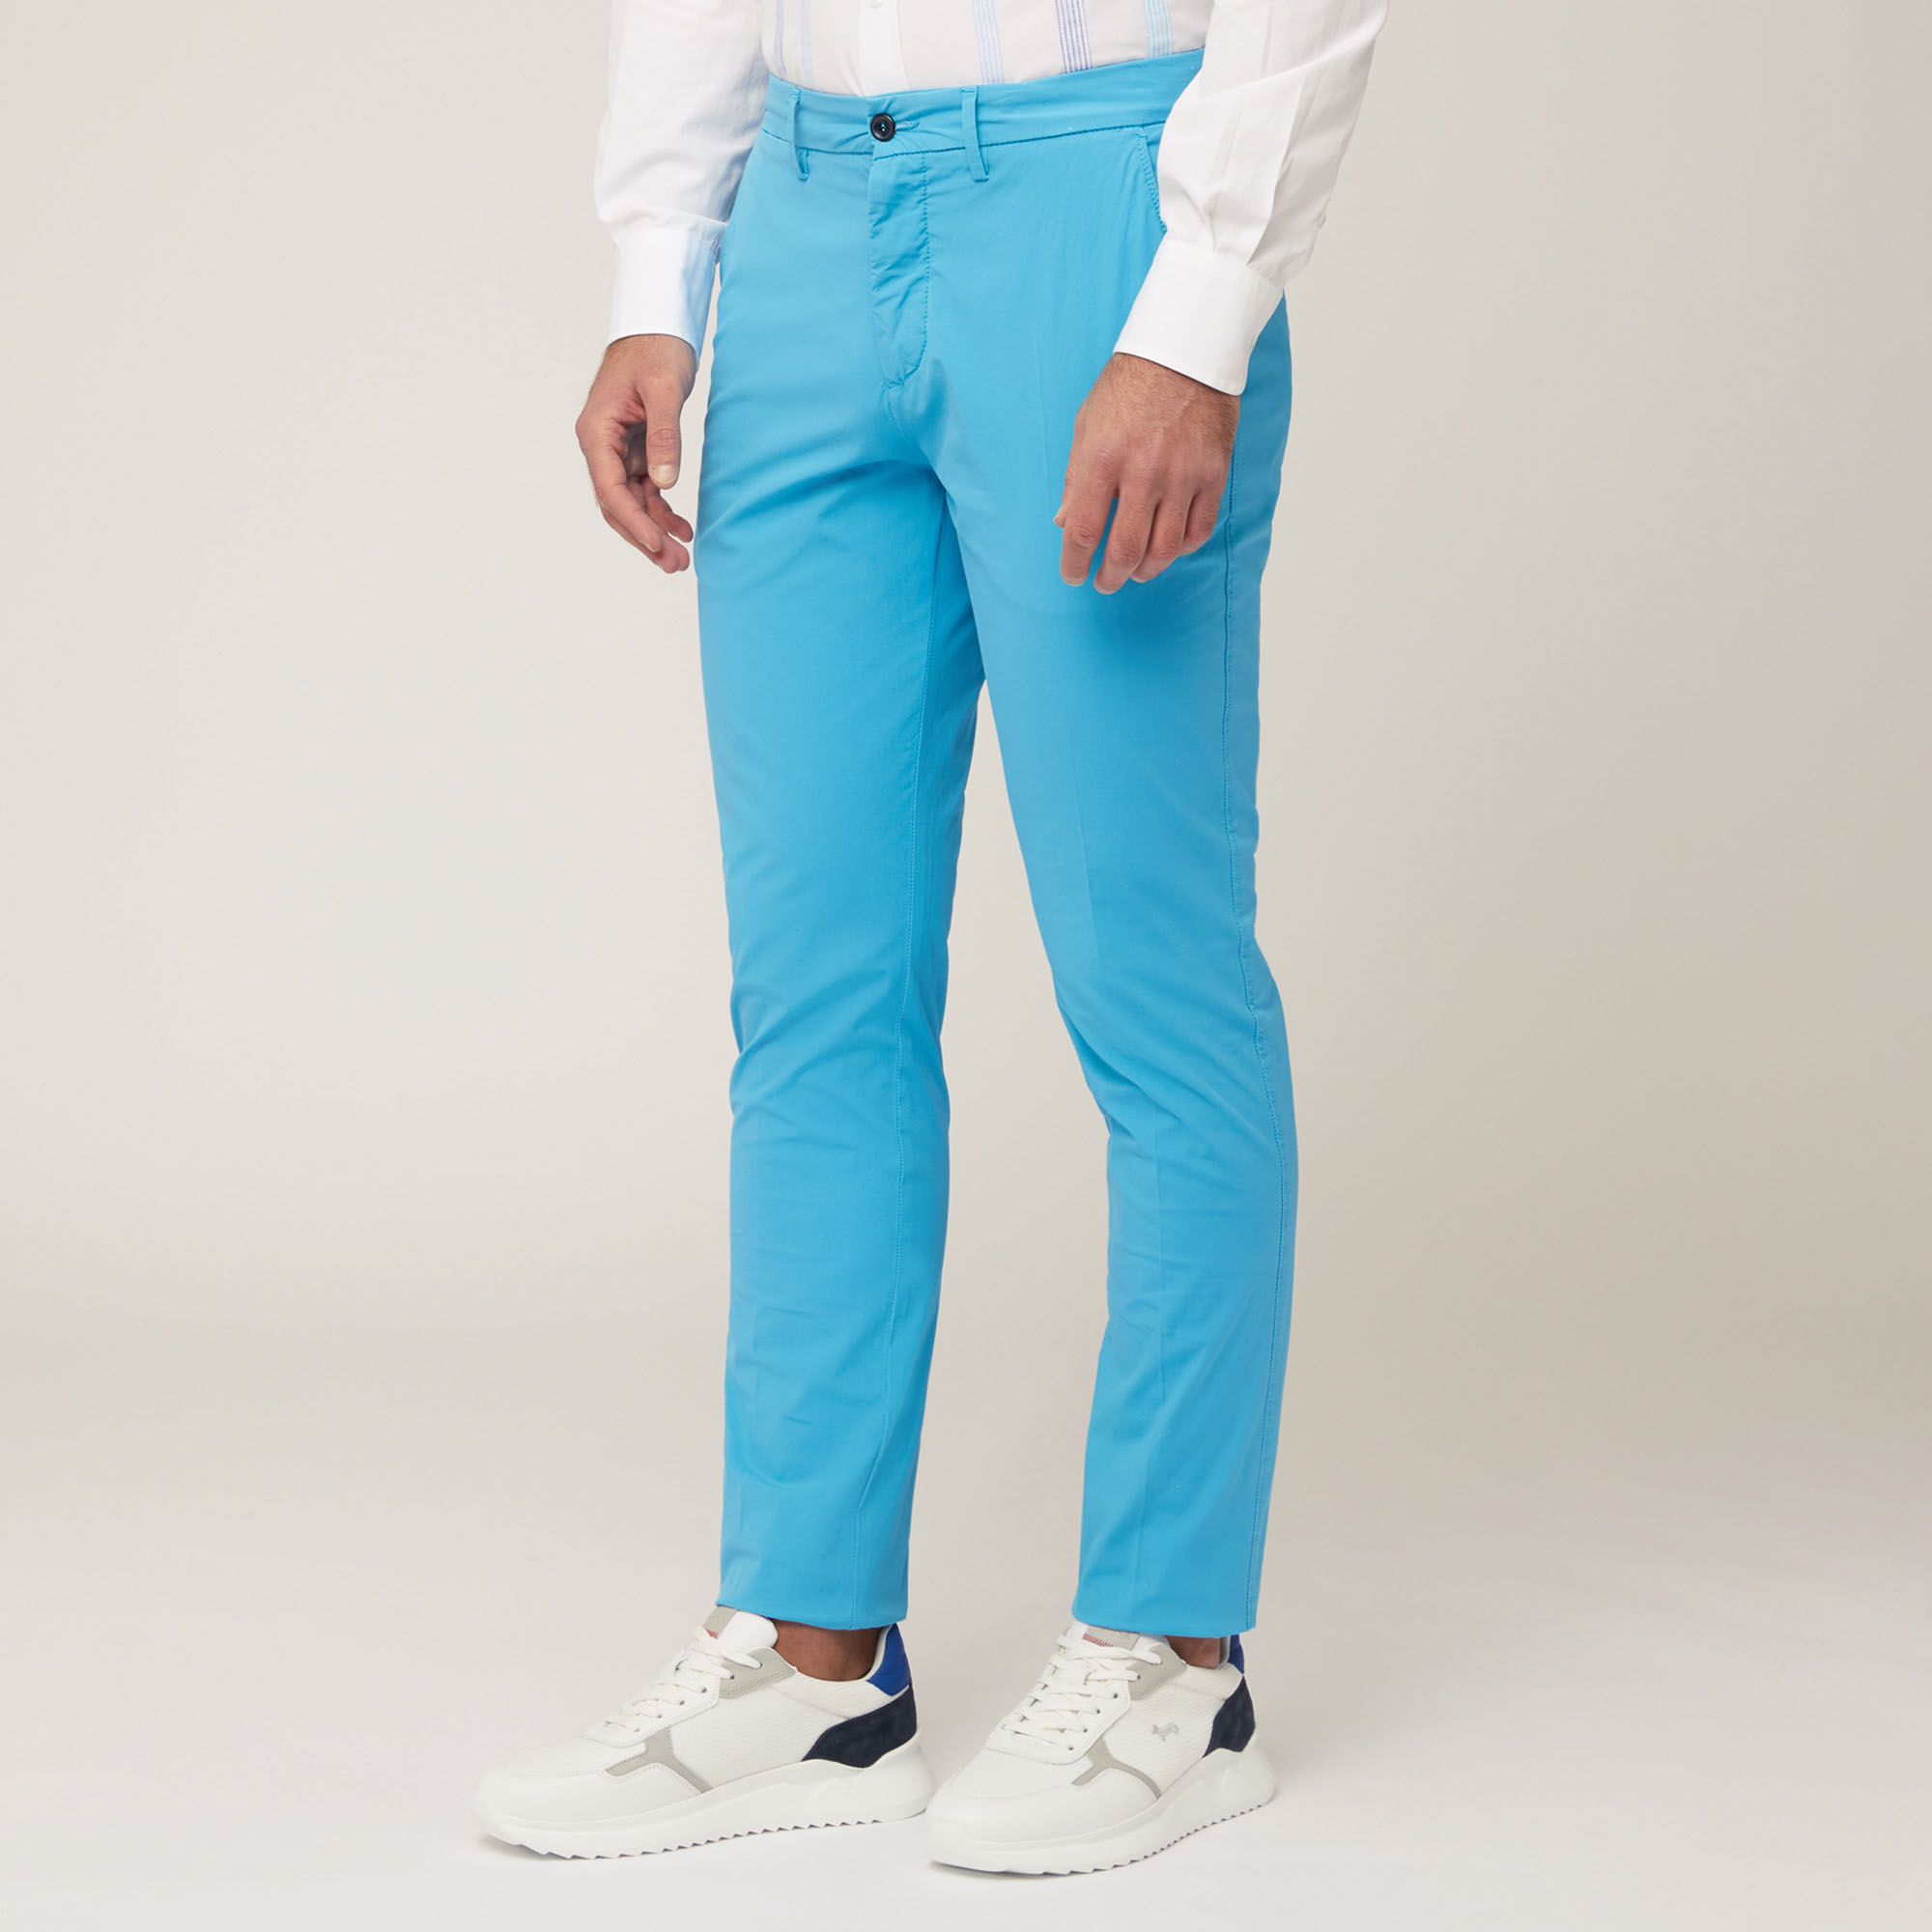 Narrow Fit Chino Pants, Light Blue, large